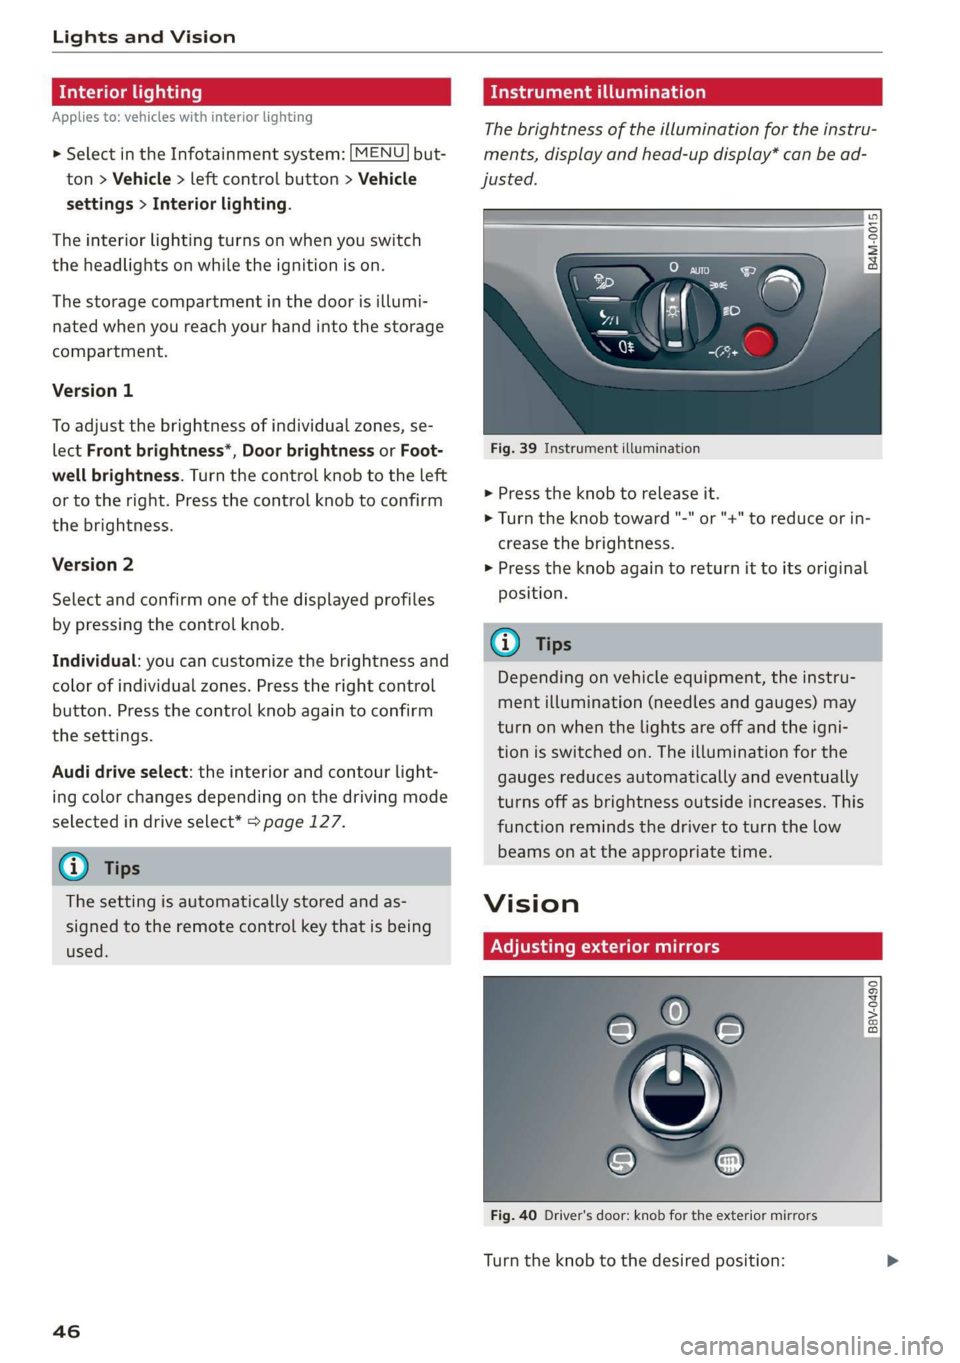 AUDI Q7 2019  Owner´s Manual LightsandVision
 
Interiorlighting
Appliesto:vehicleswithinteriorlighting
 
  > SelectintheInfotainmentsystem:[MENU]but-
ton>Vehicle> leftcontrolbutton>Vehicle
settings>Interiorlighting.
 
Theinterior